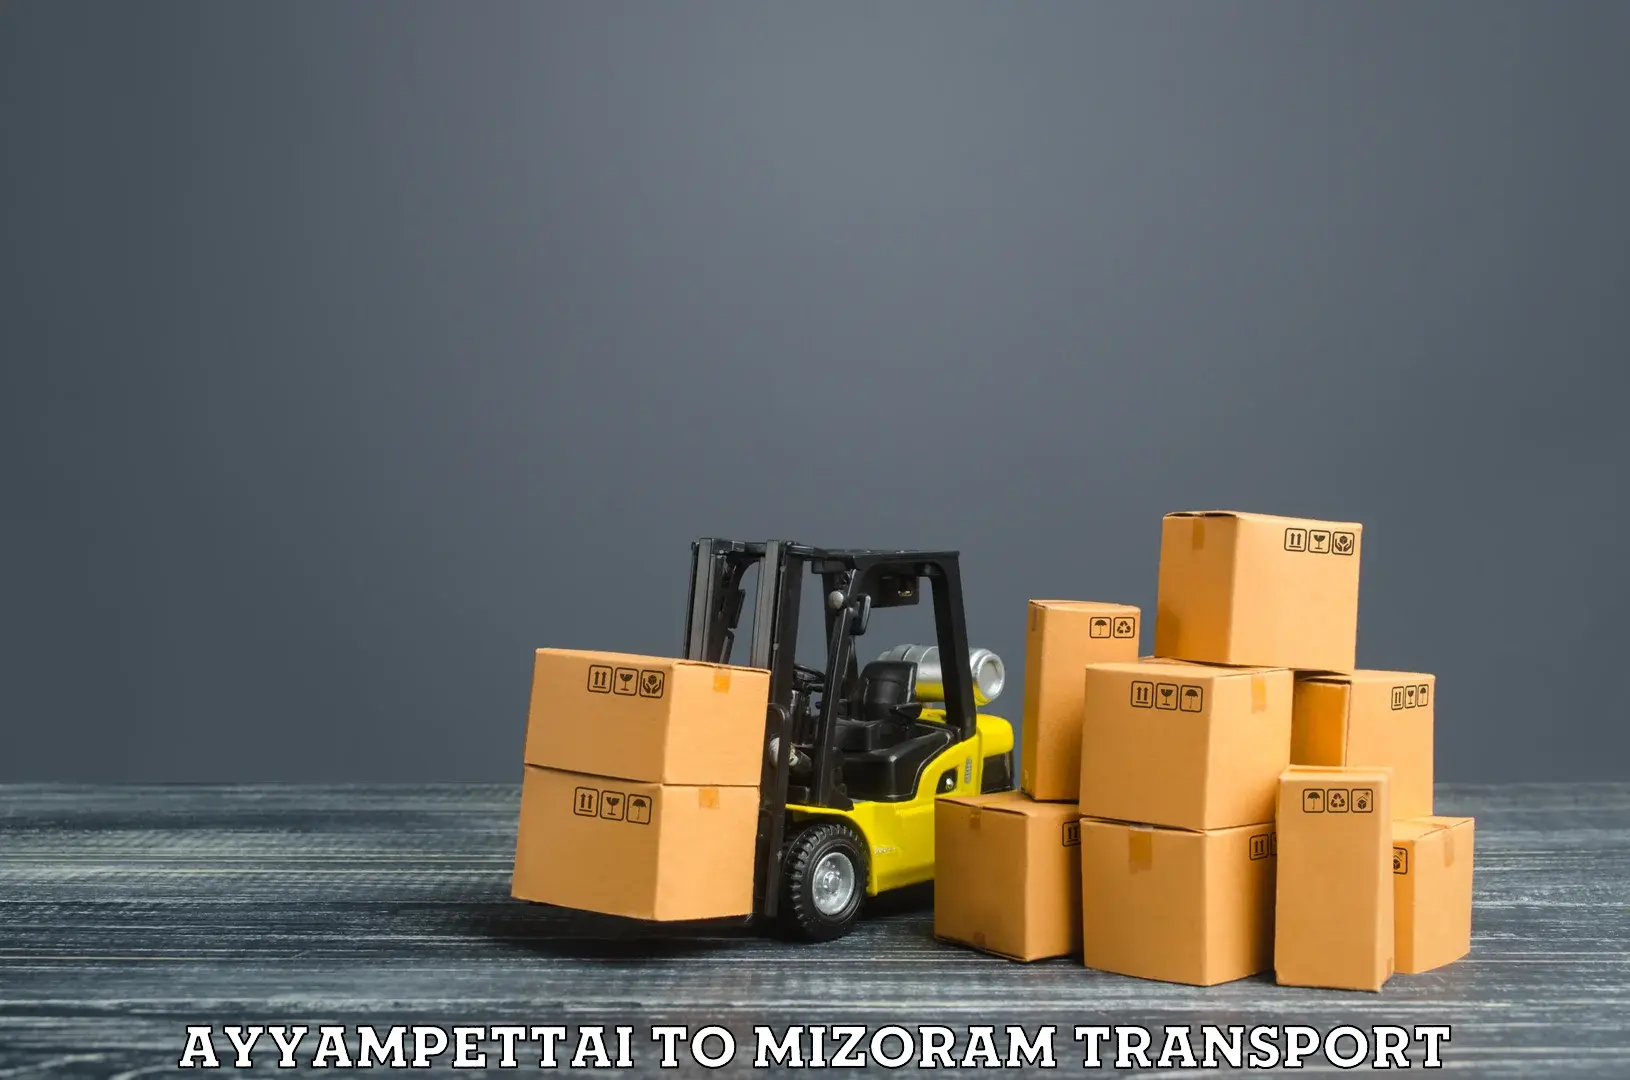 Shipping partner Ayyampettai to Mizoram